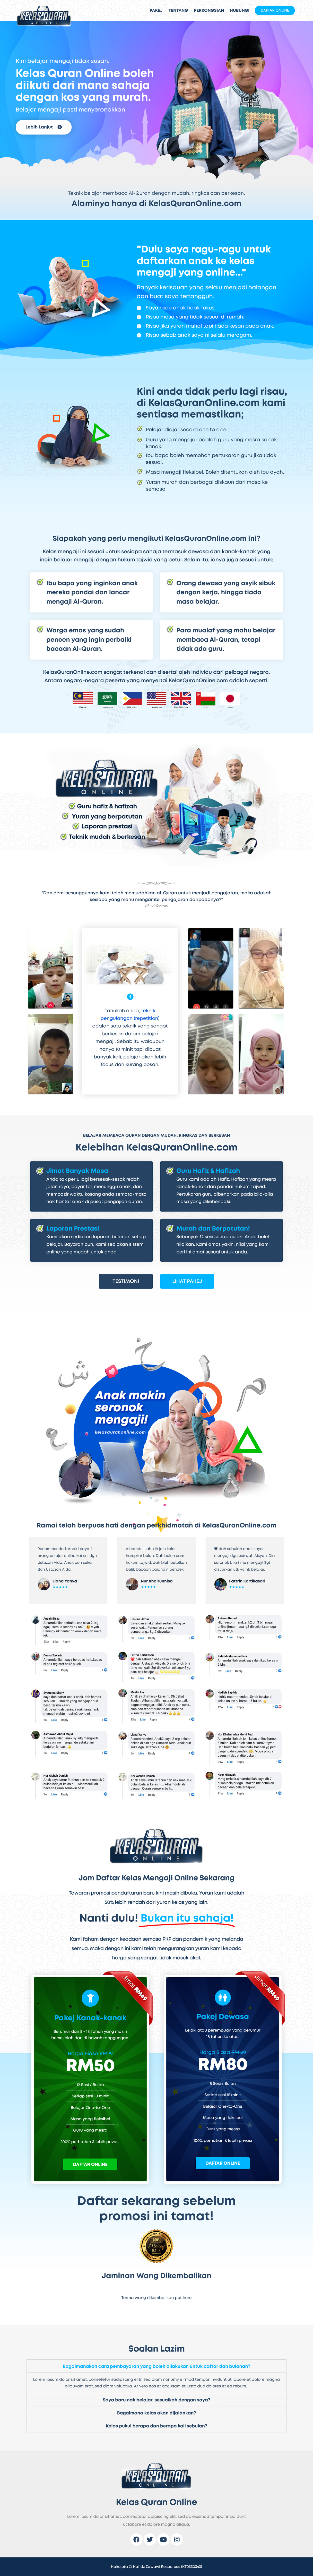 Website Design kelas mengaji online Malaysia